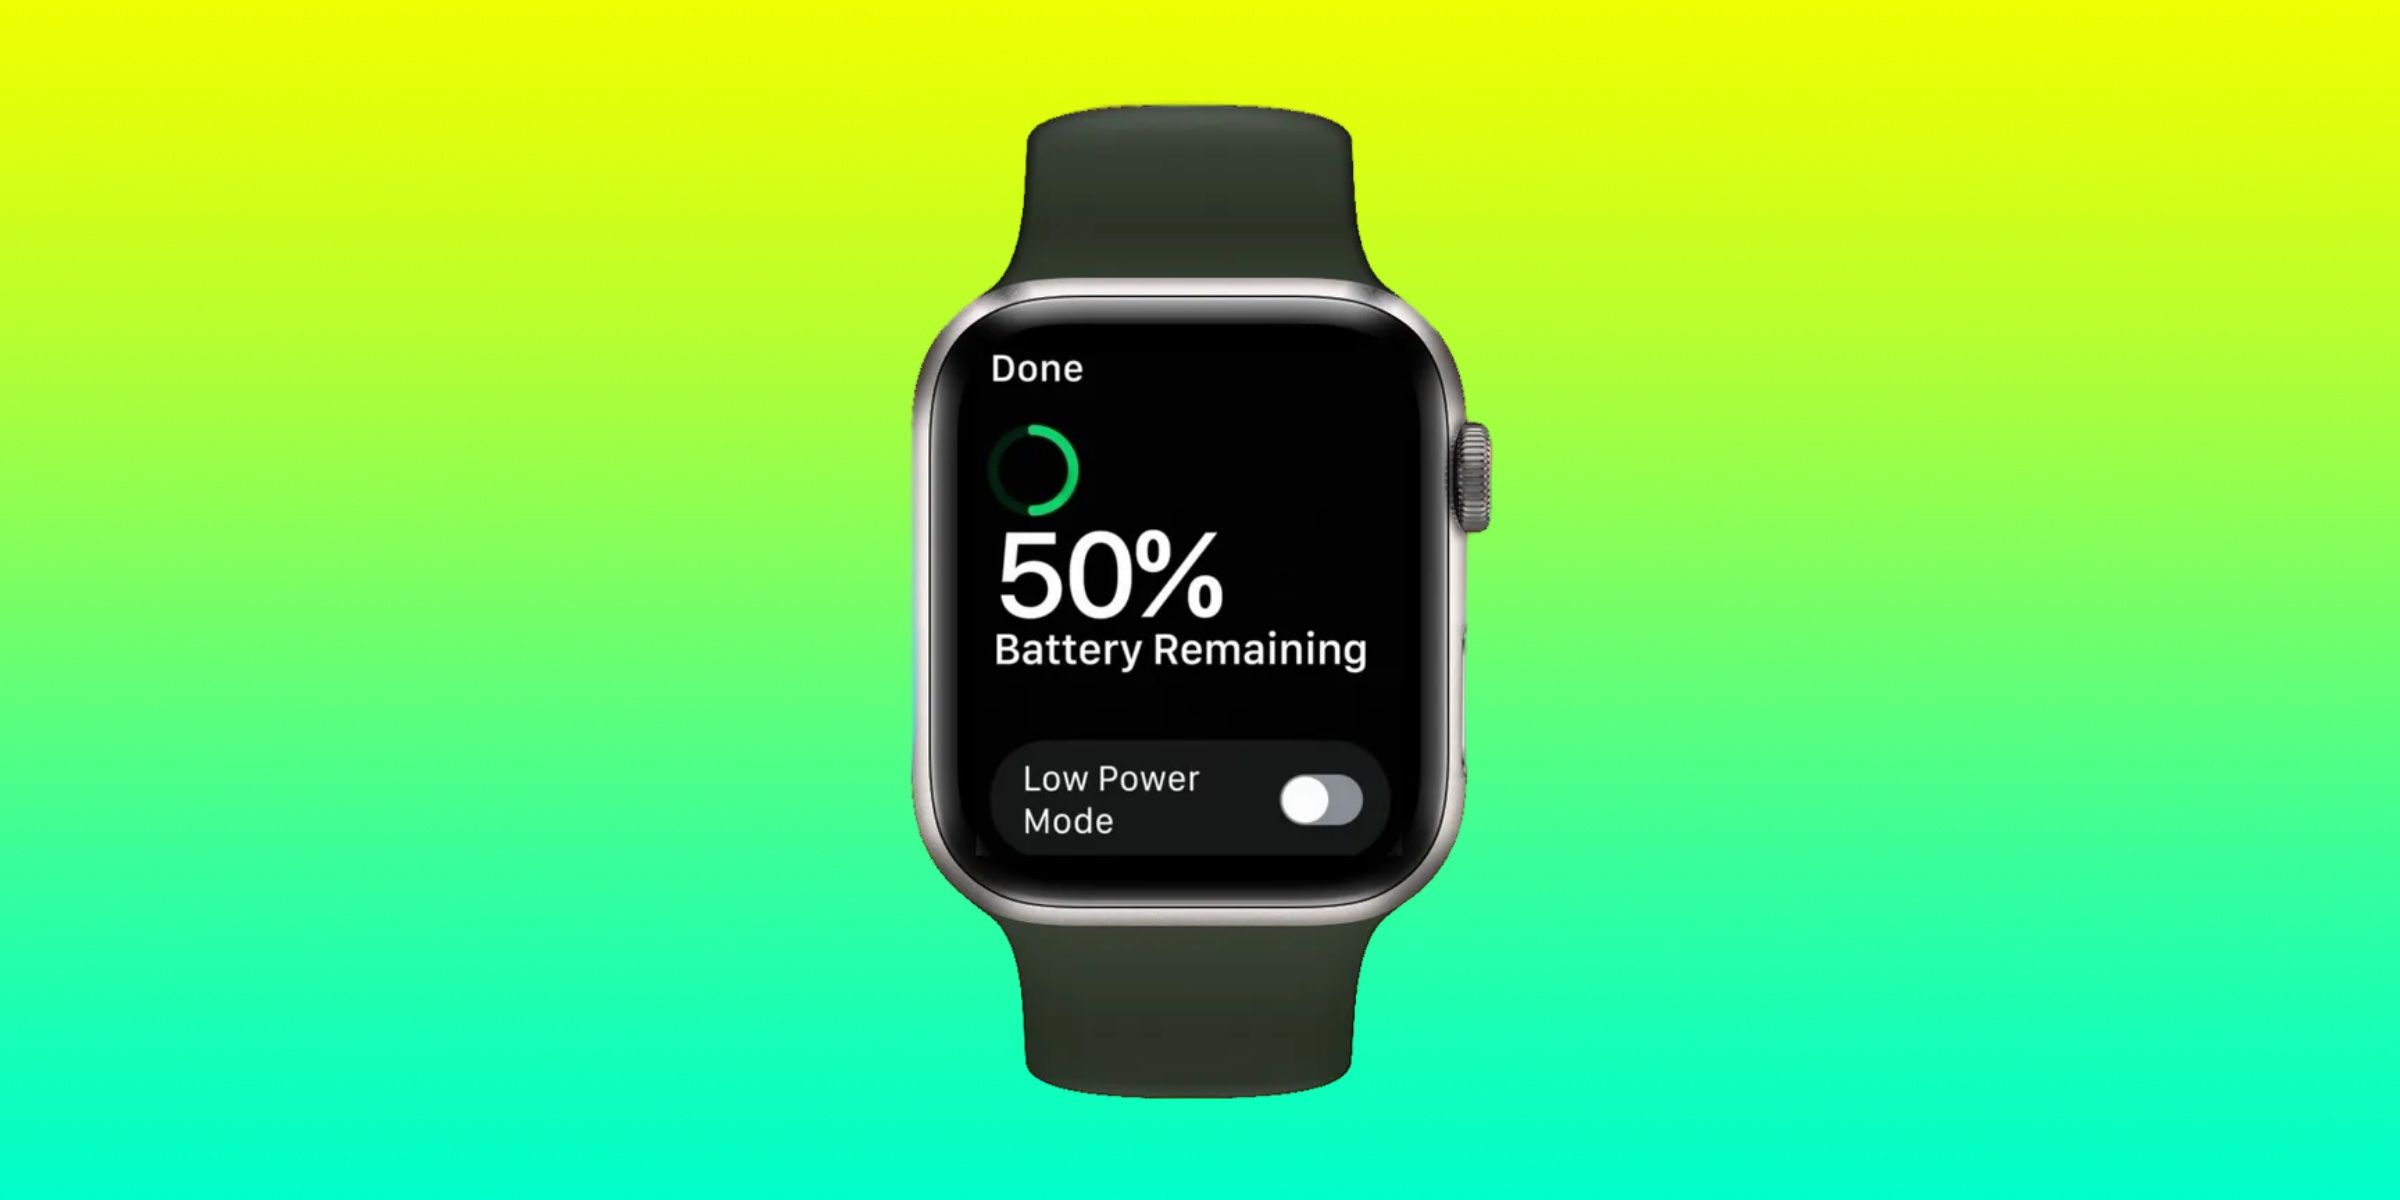 Apple Watch's new power saving mode.